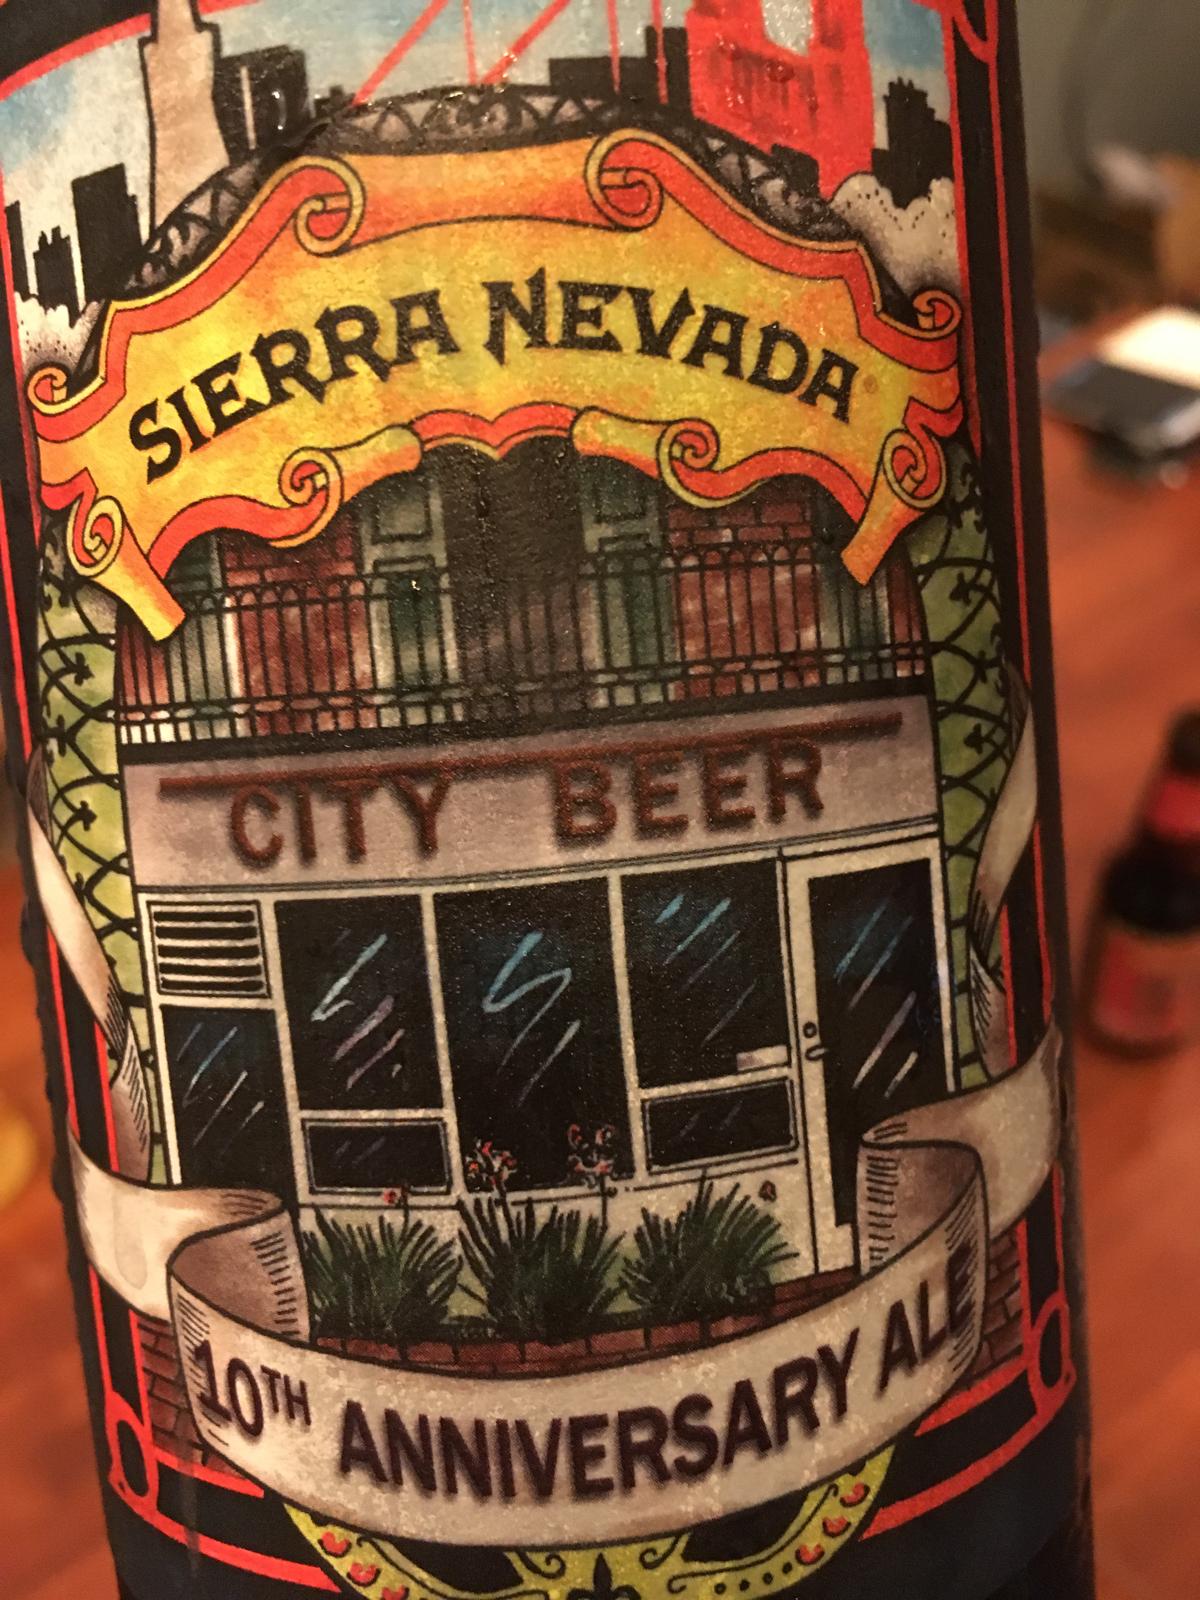 City Beer 10th Anniversary